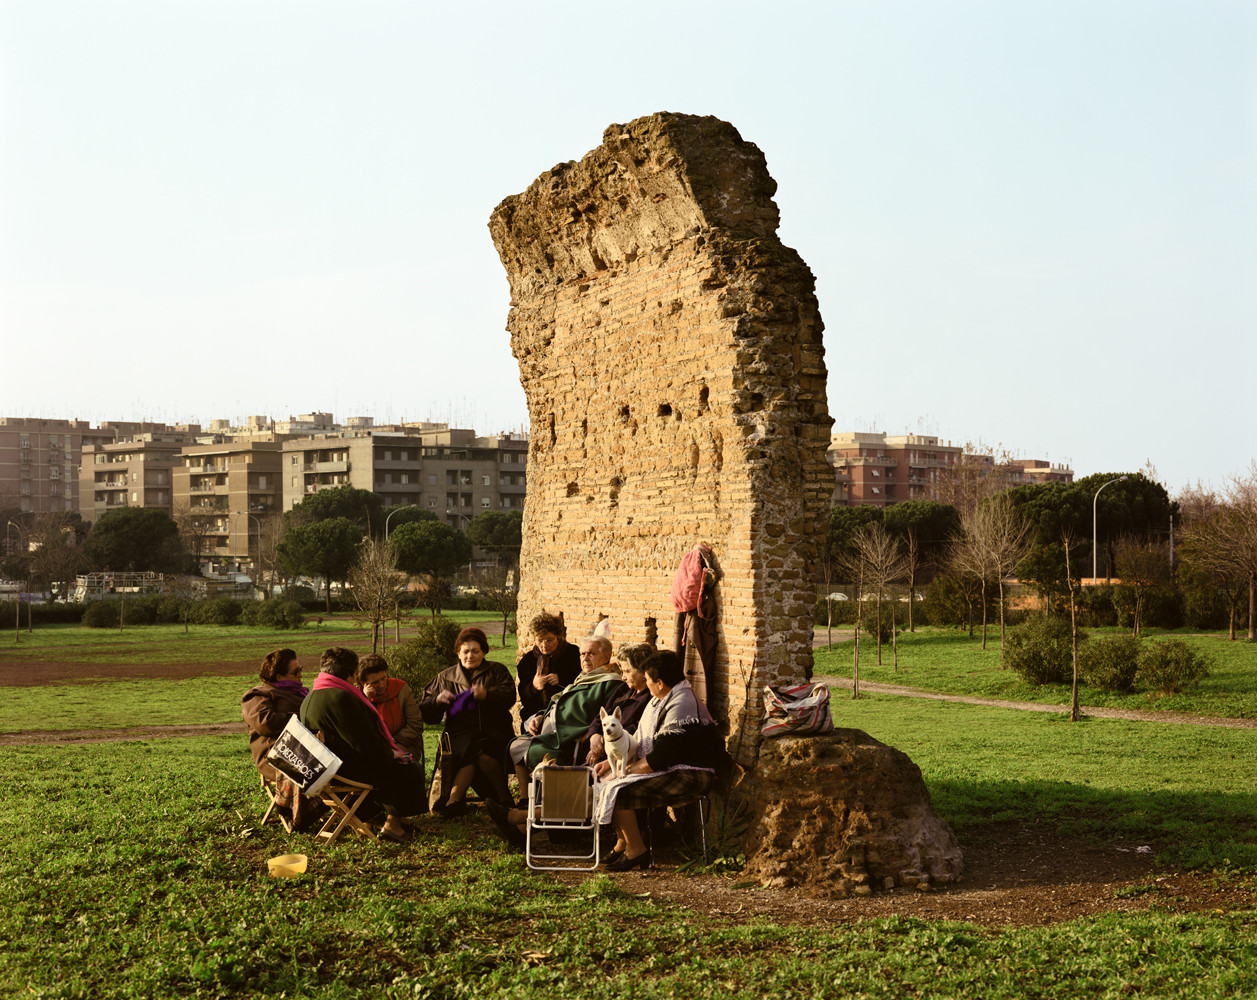 Joel Sternfeld, ‘Women at a daily gathering beside an ancient Roman wall, Parco dei Gordiani, Rome, October’, 1990, Digital c-print, 2006